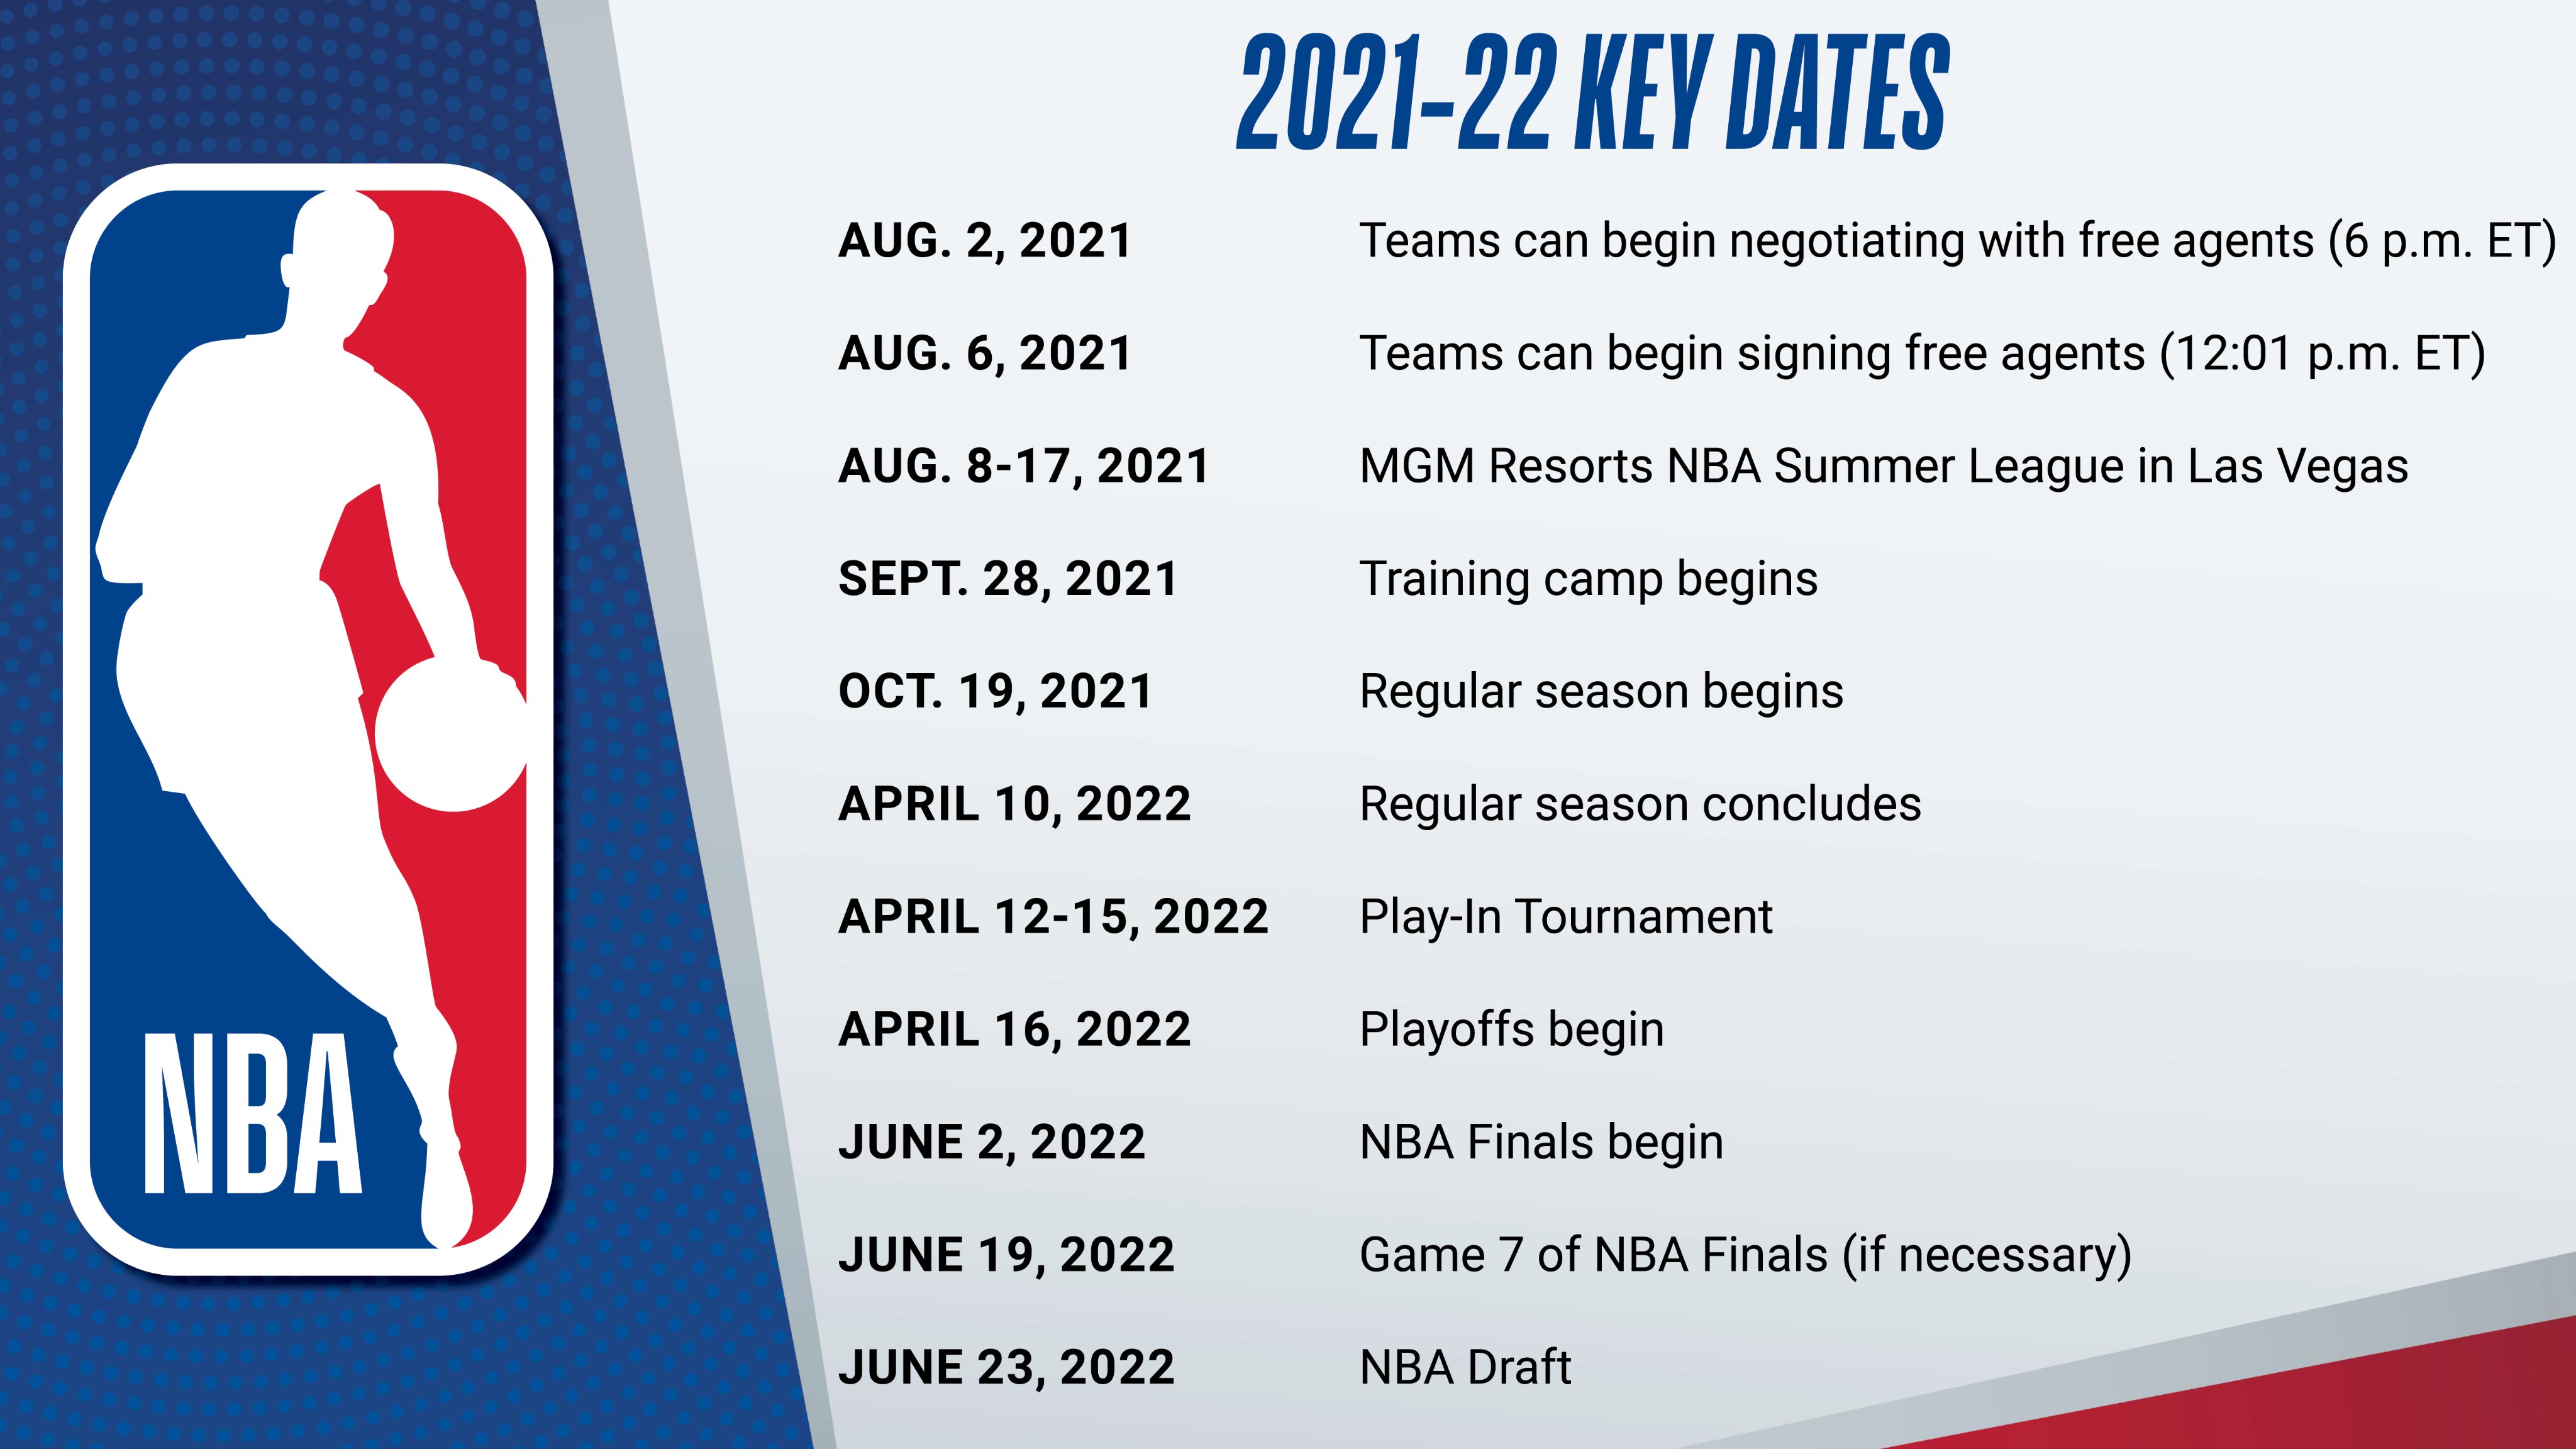 Nba Final 2022 Schedule Nba Communications On Twitter: "Key Dates For The 2021-22 Nba Season ⬇️  Https://T.co/Nbwcivrhzh" / Twitter